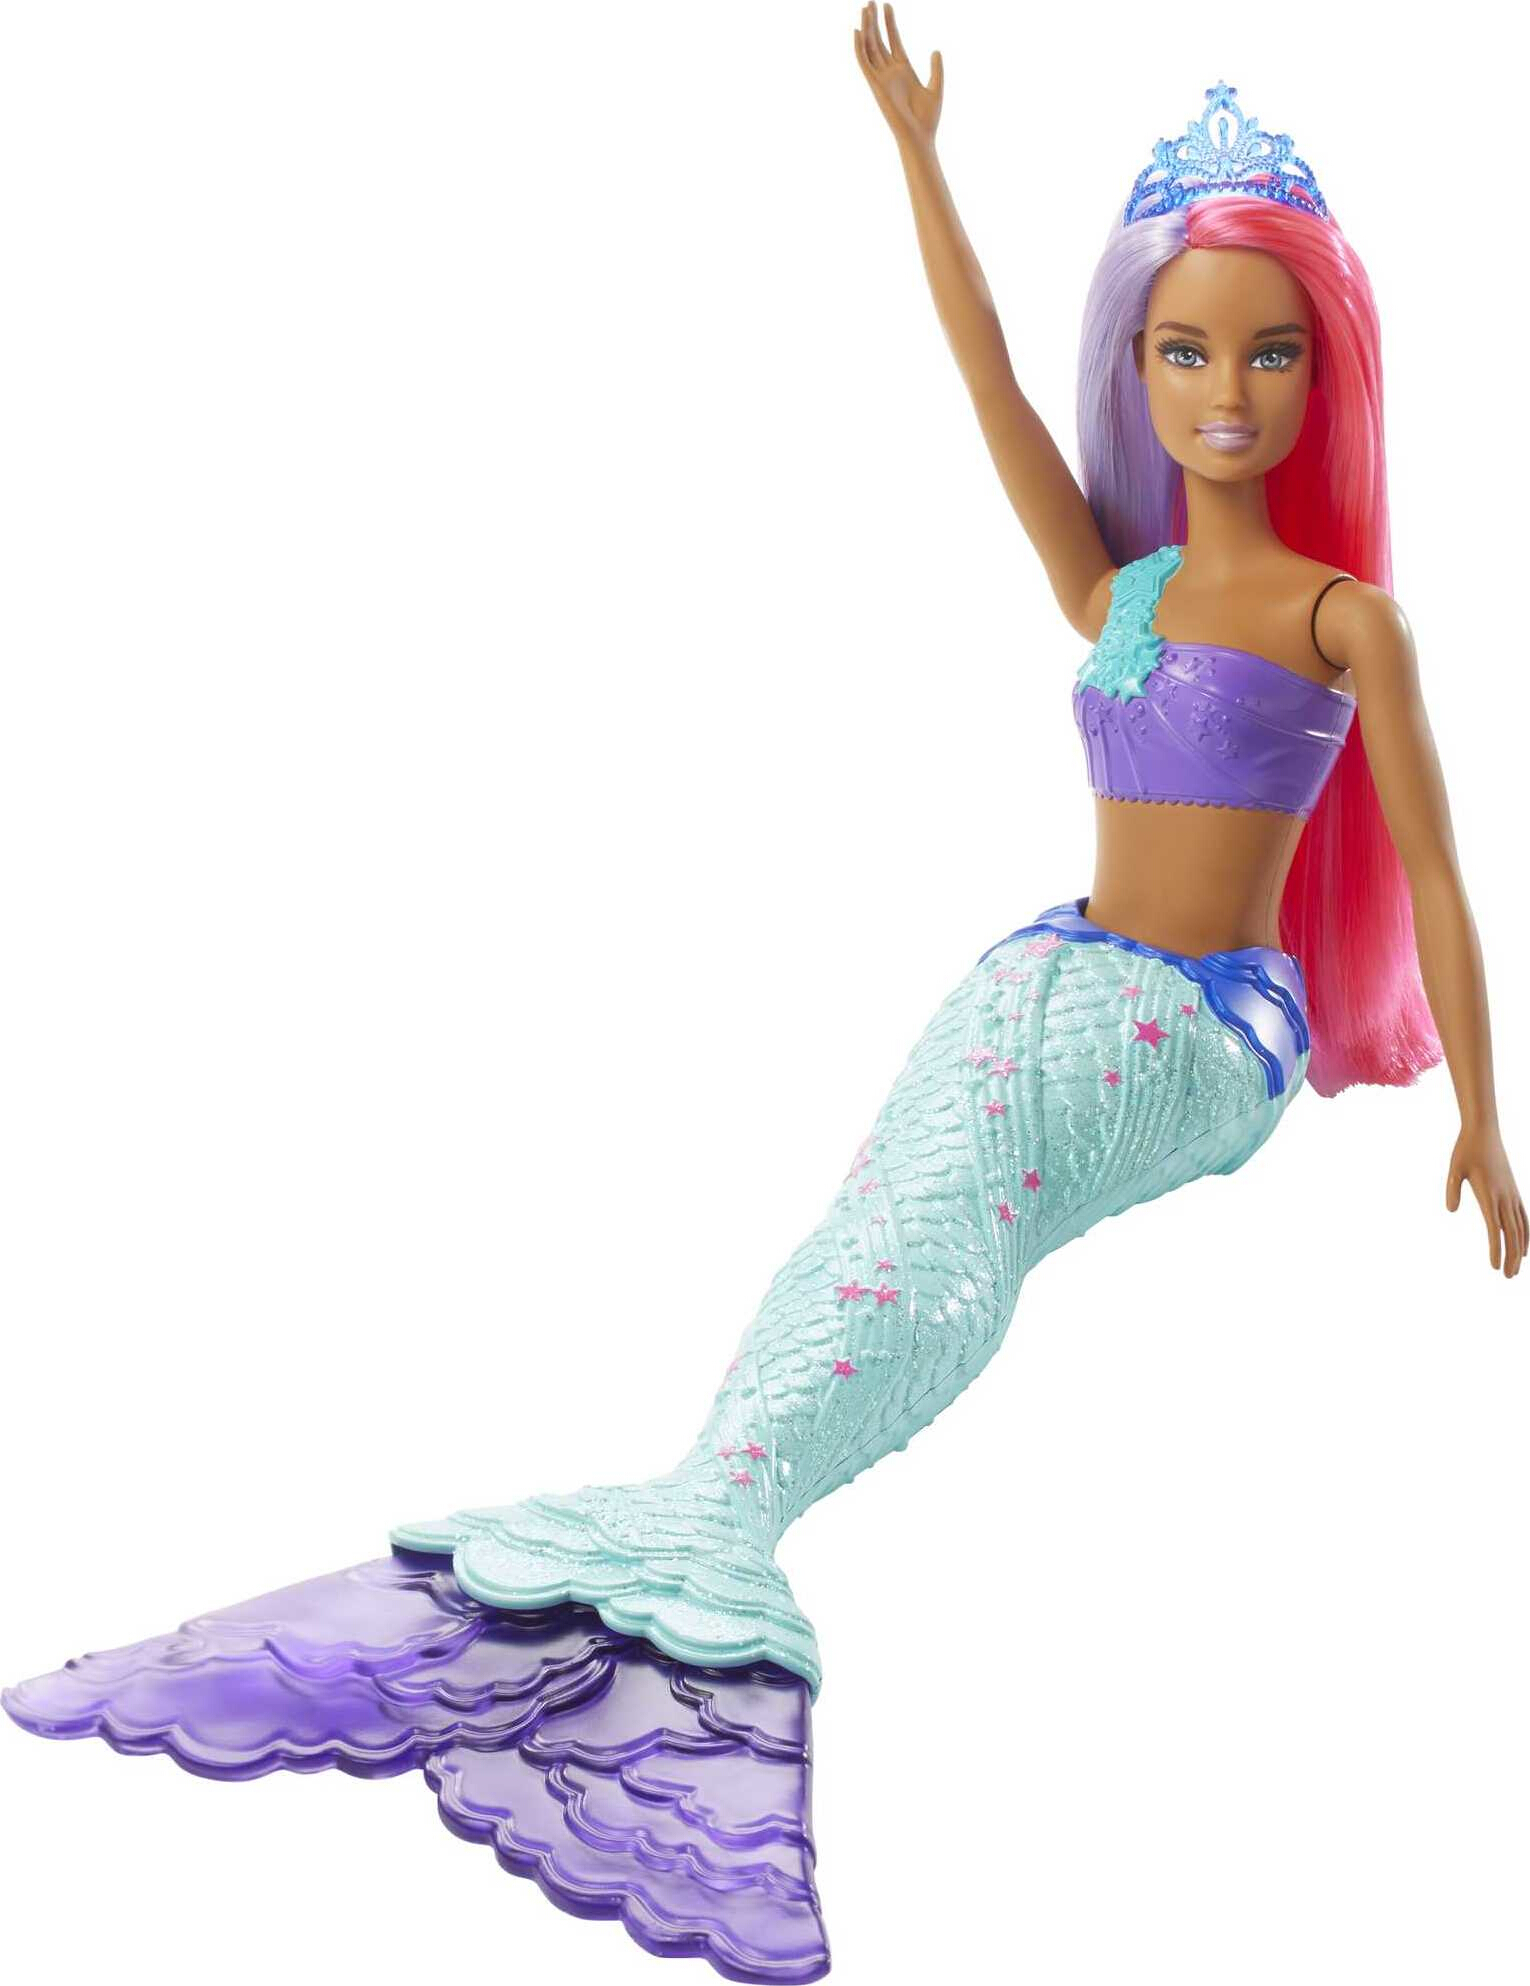 Barbie Dreamtopia Mermaid Doll, 12-inch, Pink and Purple Hair - image 5 of 6